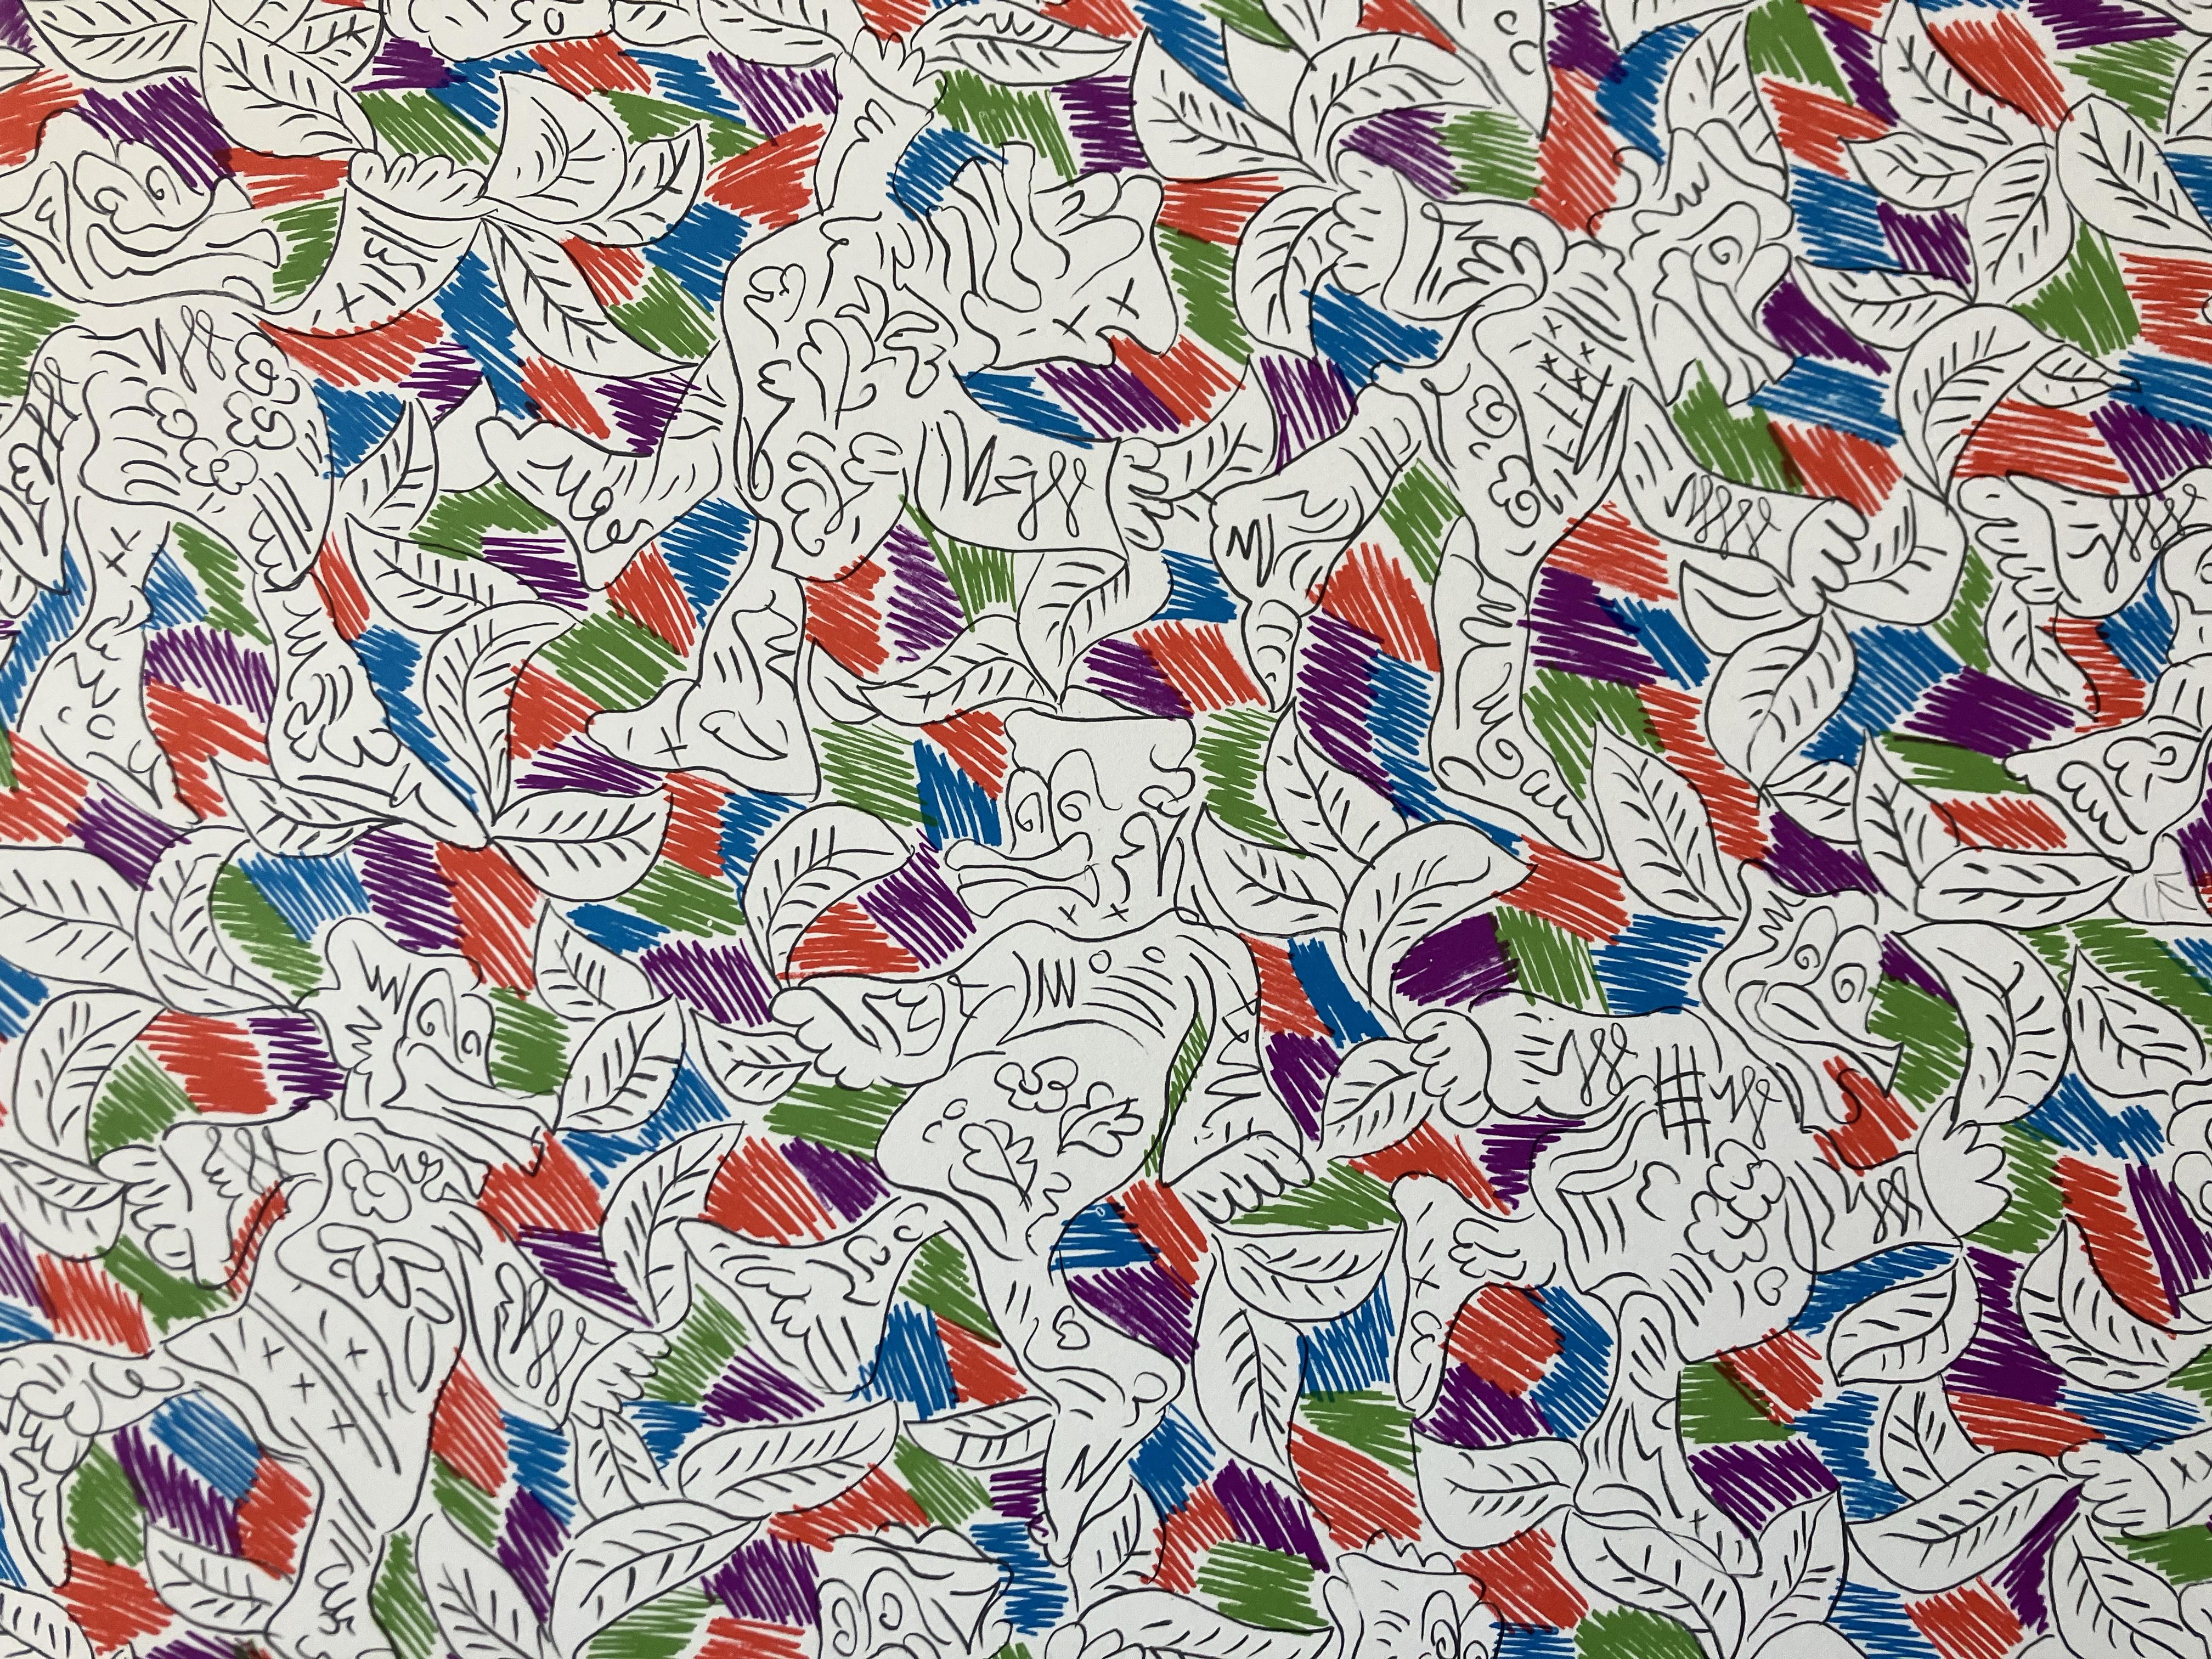 Dancing Ducks in Red, Green, Blue, Purple - Gray Figurative Print by George Chemeche